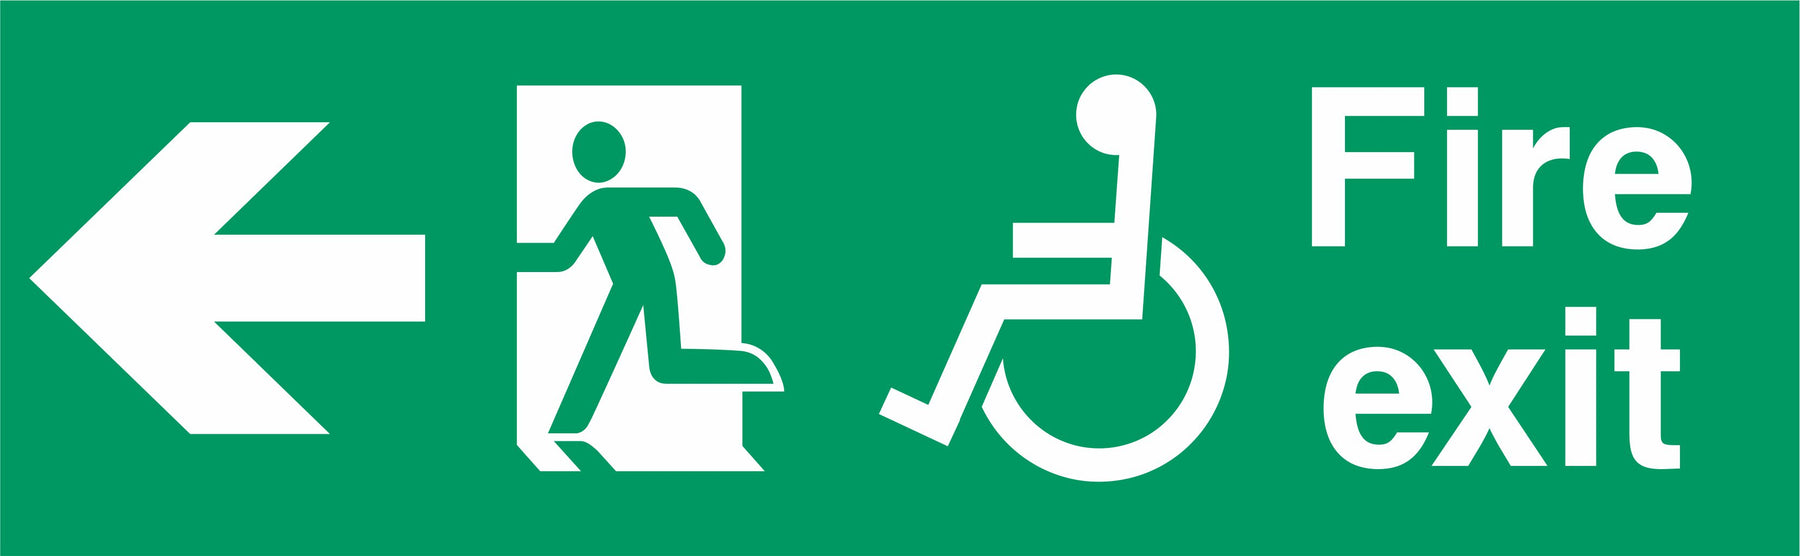 Fire exit - Running Man Left - Left Arrow - Disabled logo